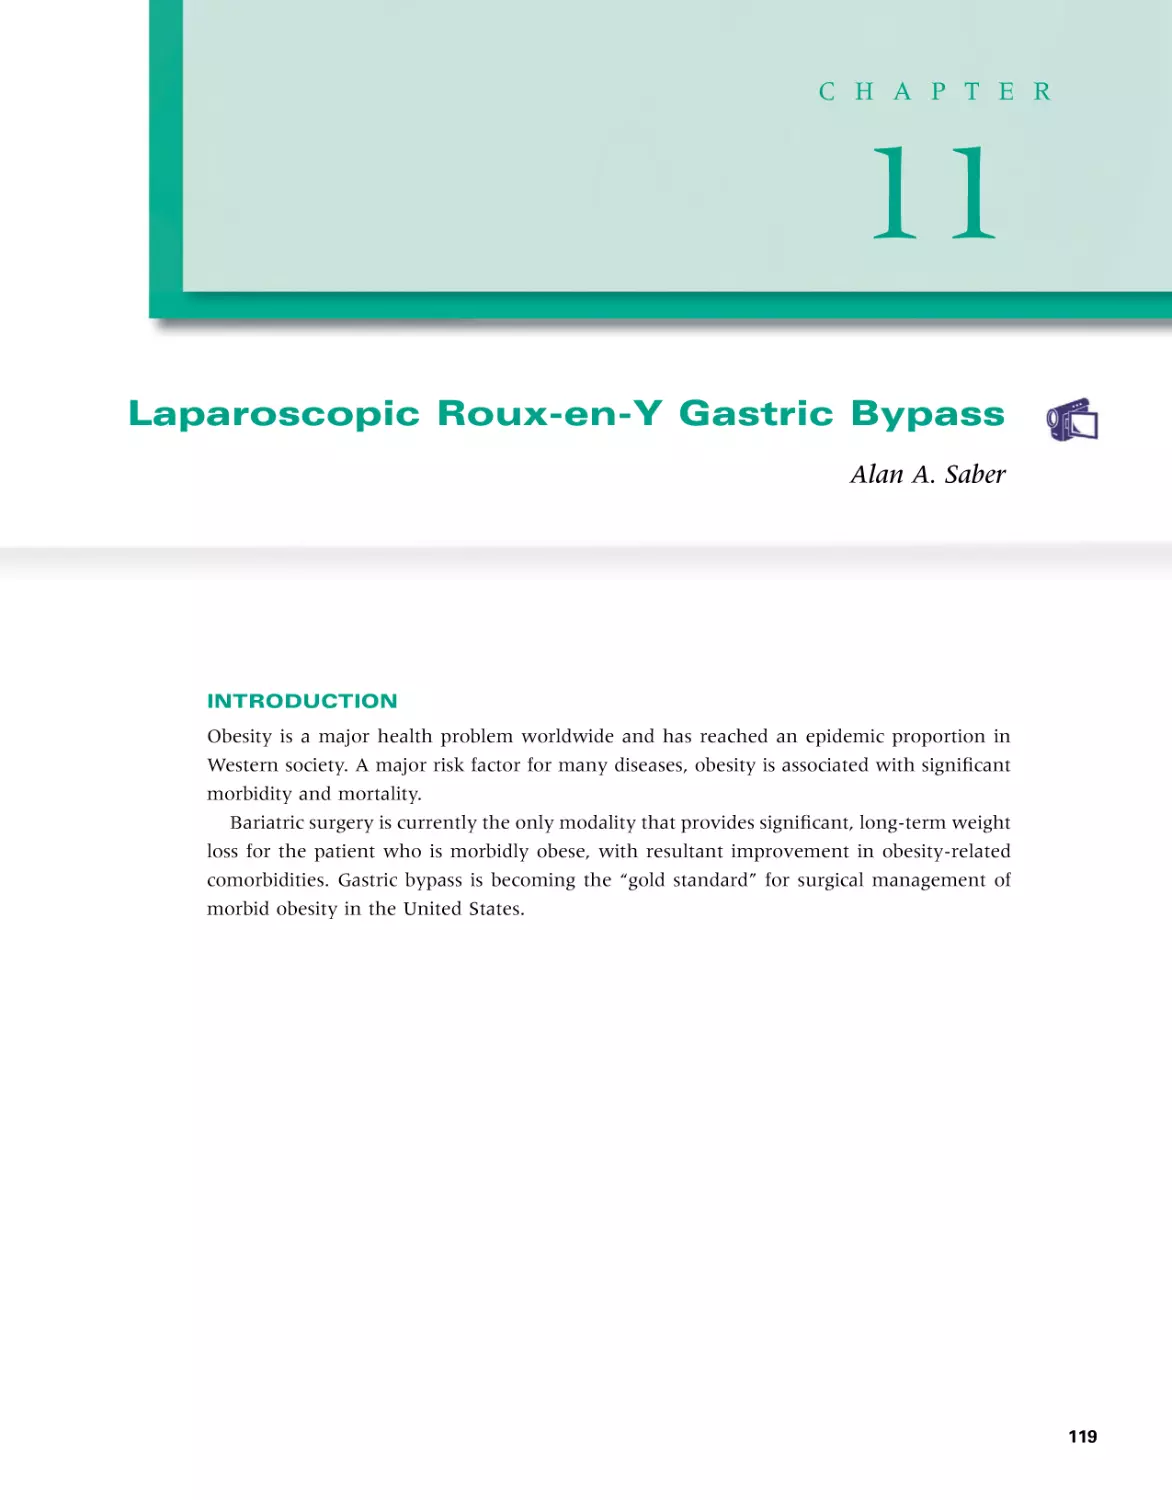 11 Laparoscopic Roux-en-Y Gastric Bypass
Introduction